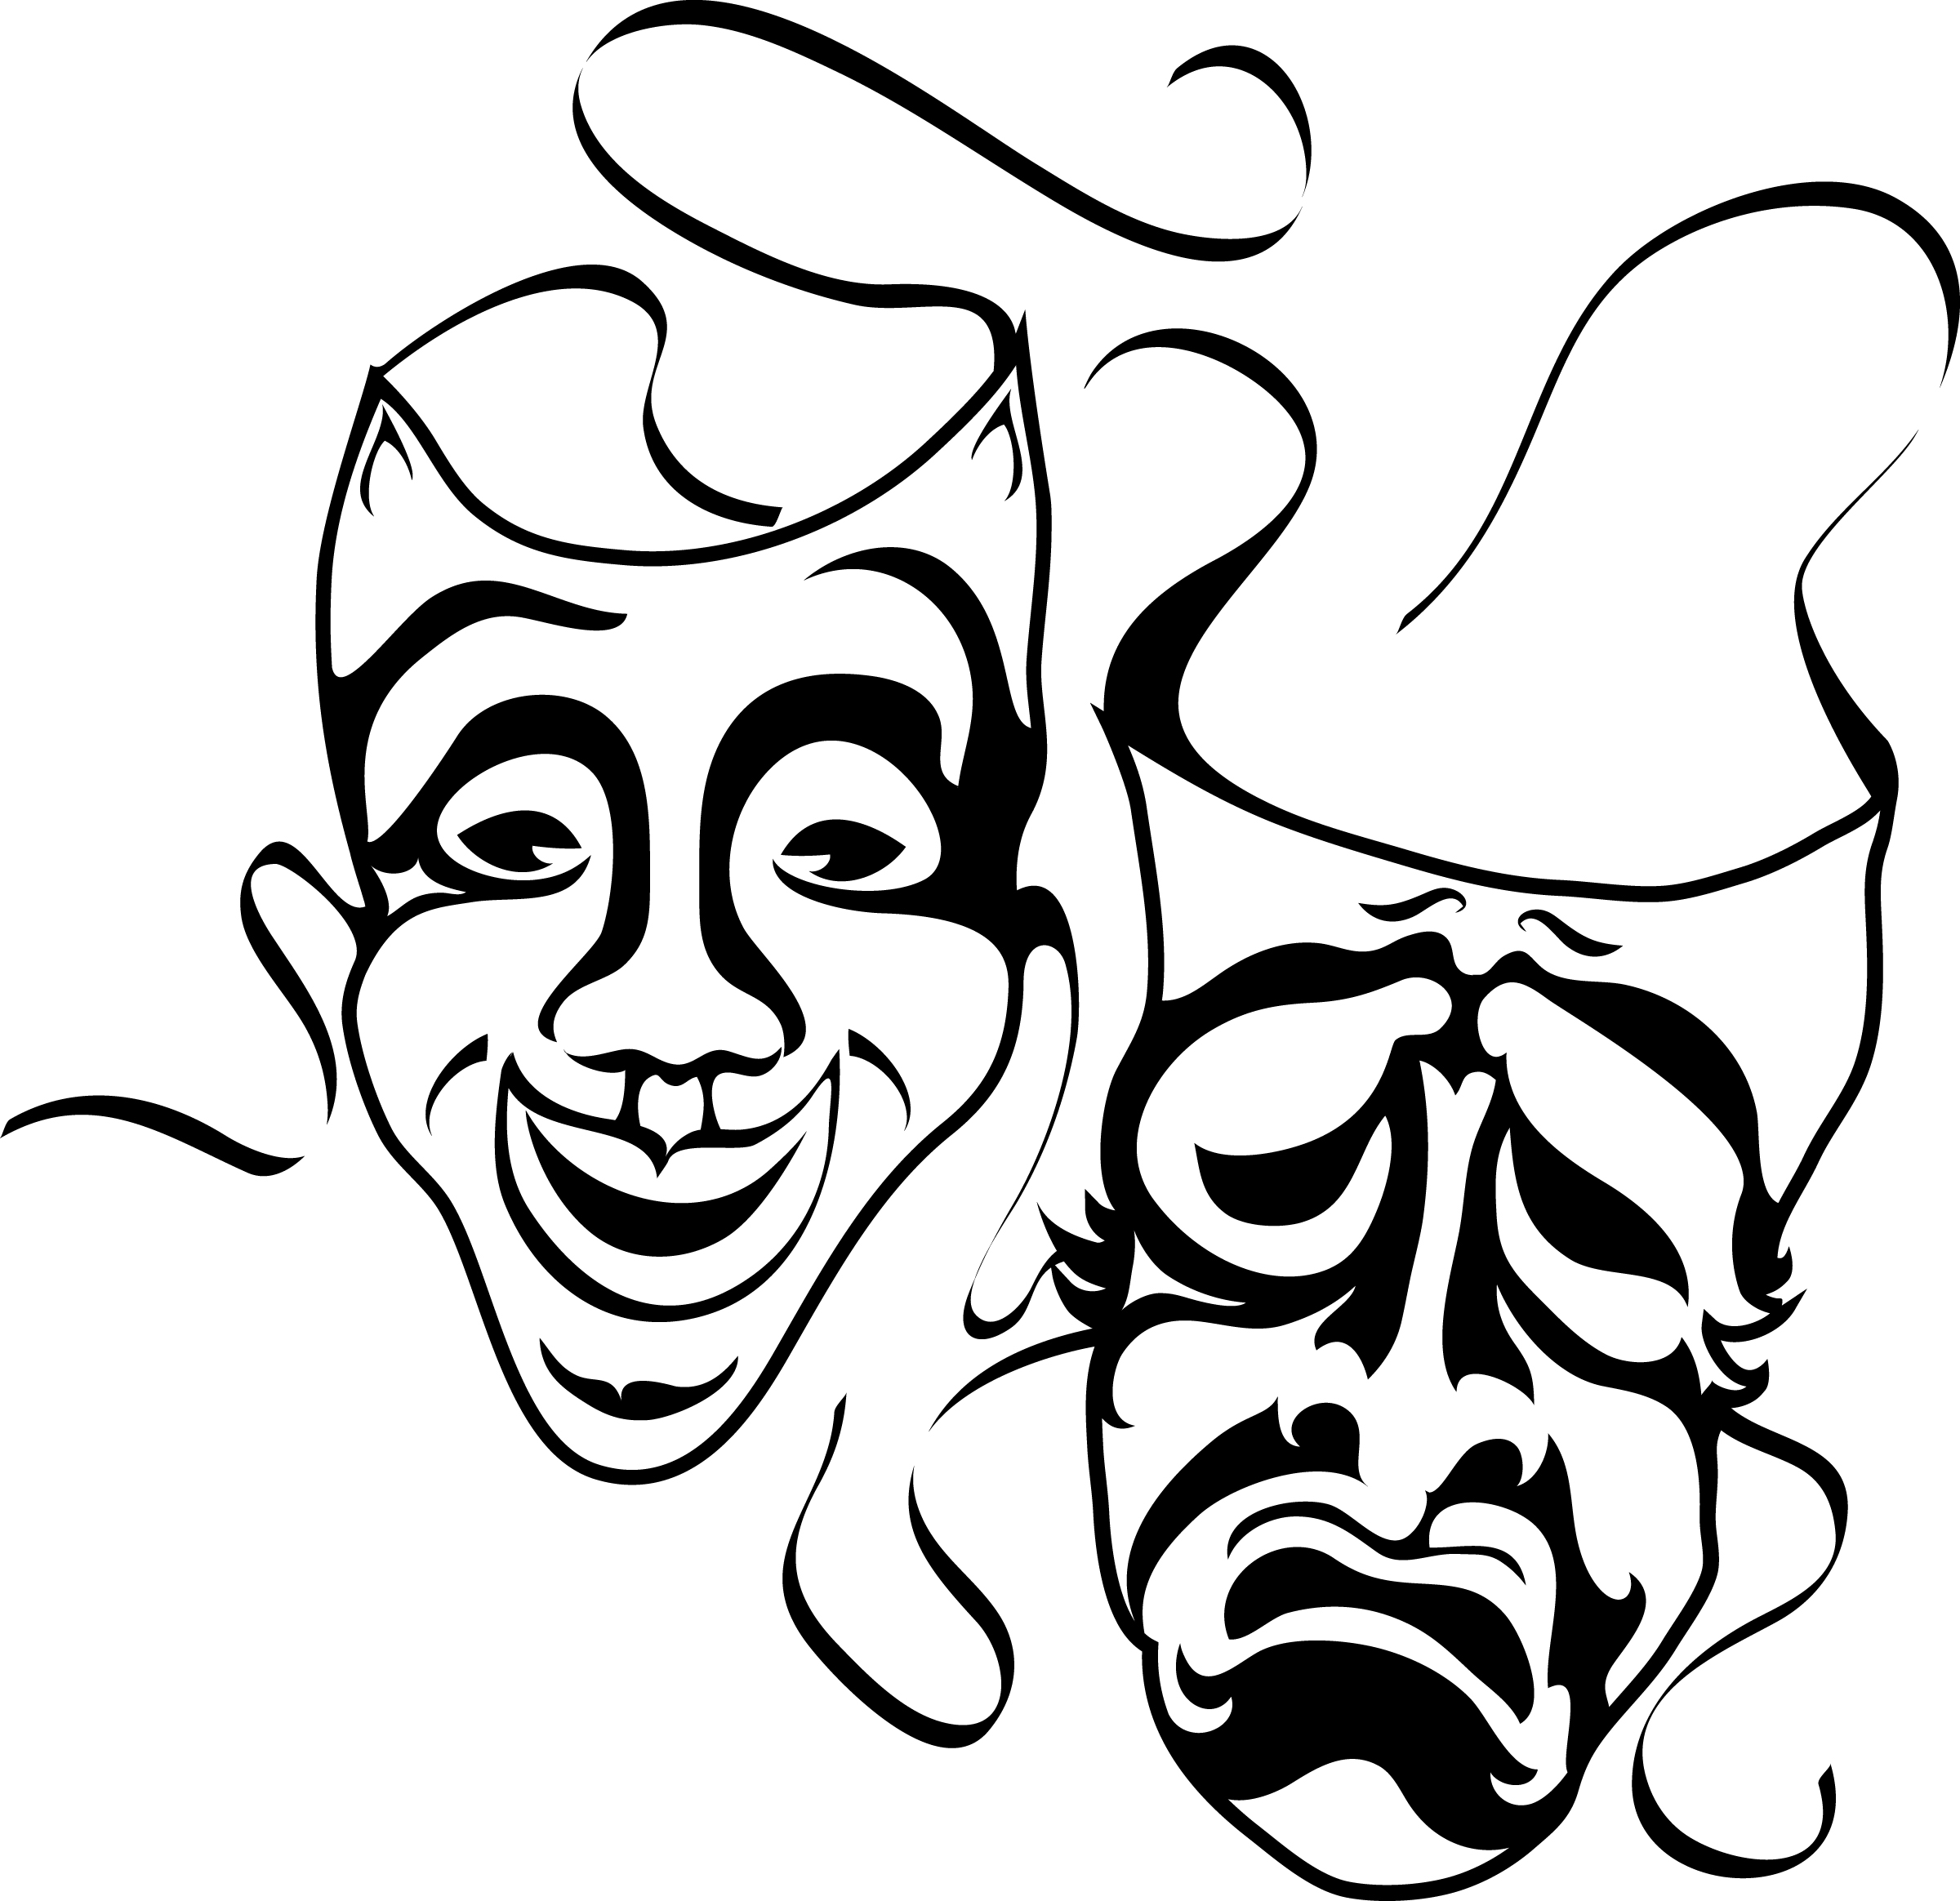 Театральная маска для печати